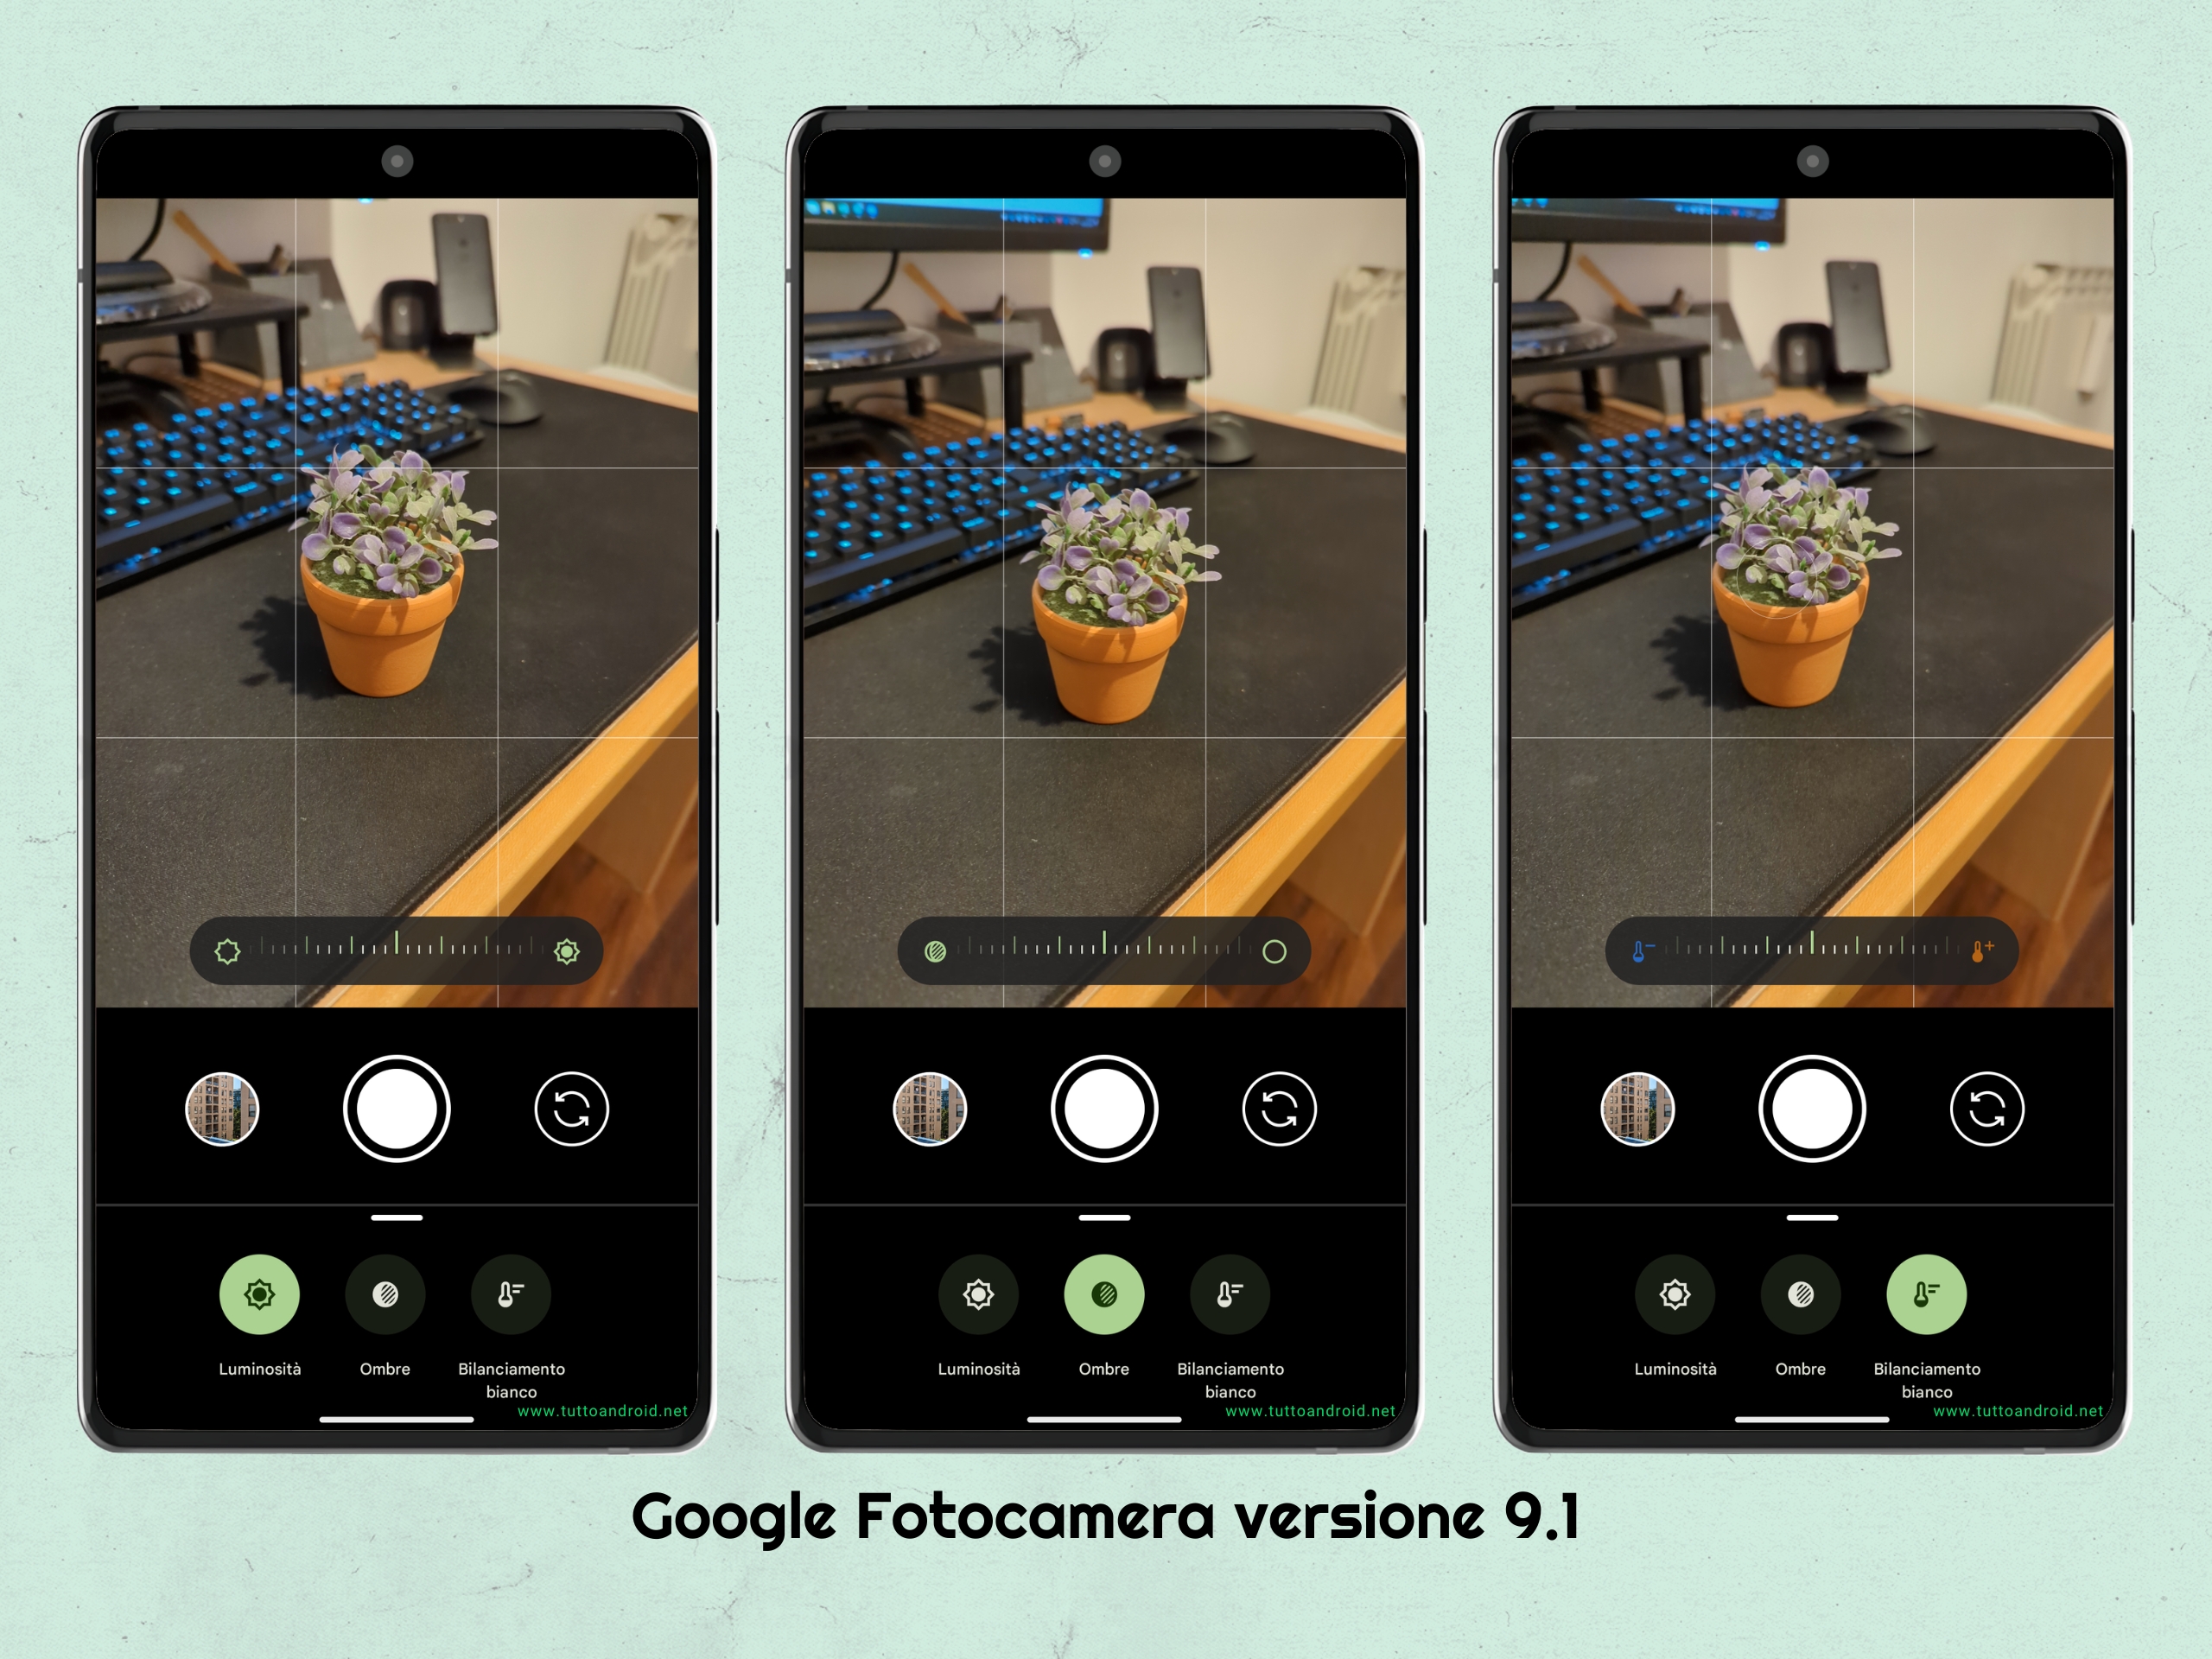 Google Fotocamera versione 9.1 - Controlli